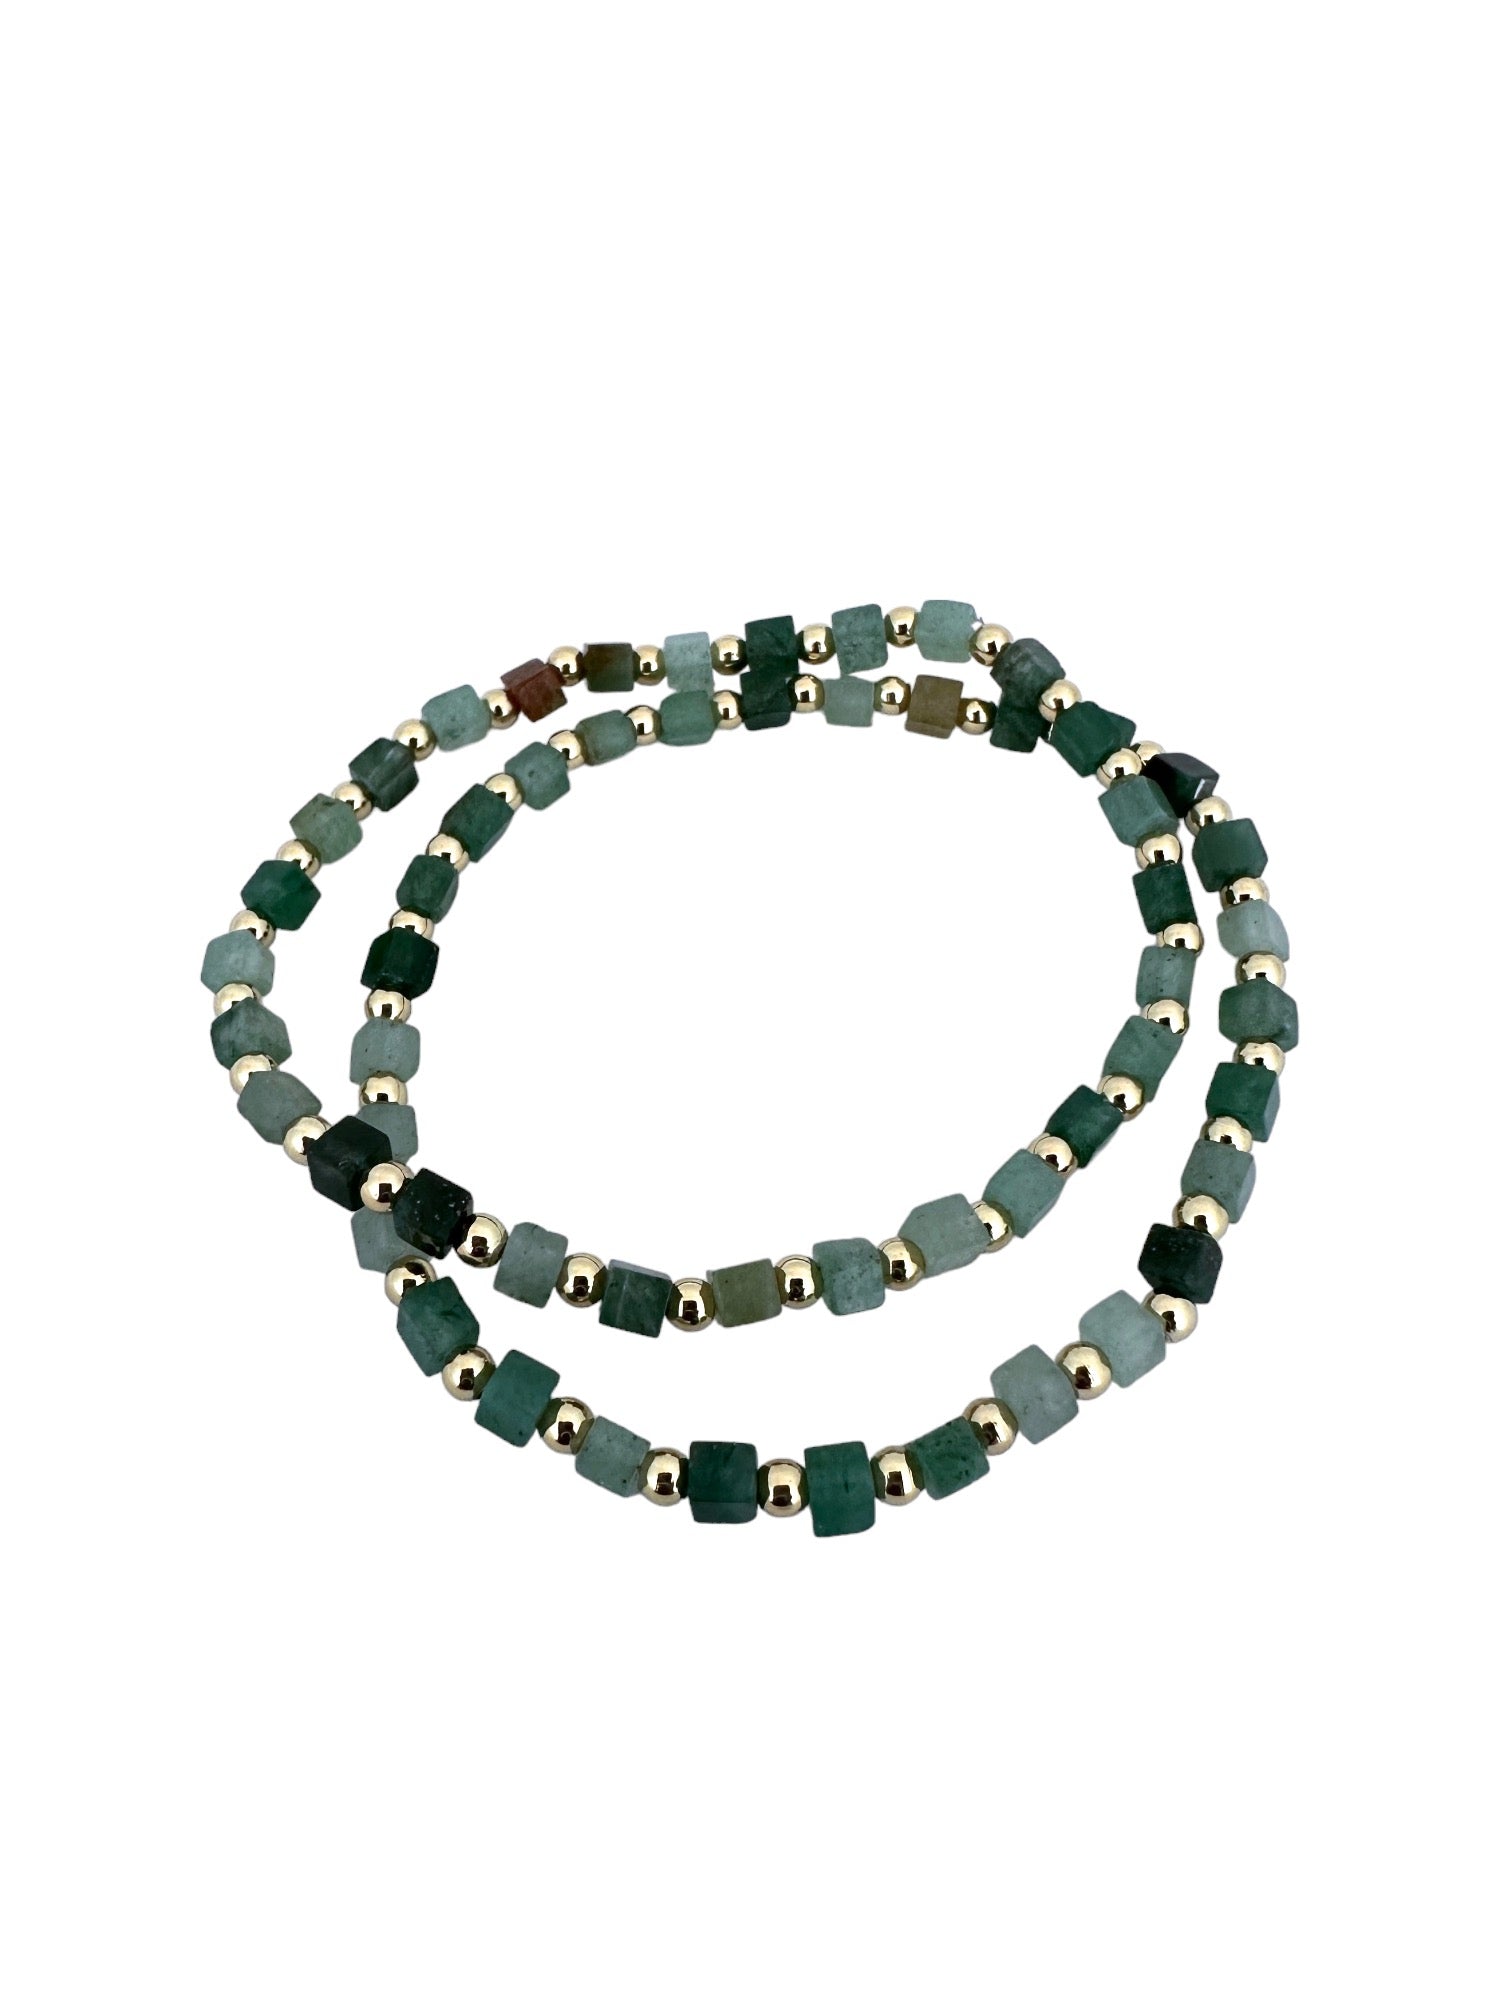 3mm Gold Balls with Rectangular Green Beads